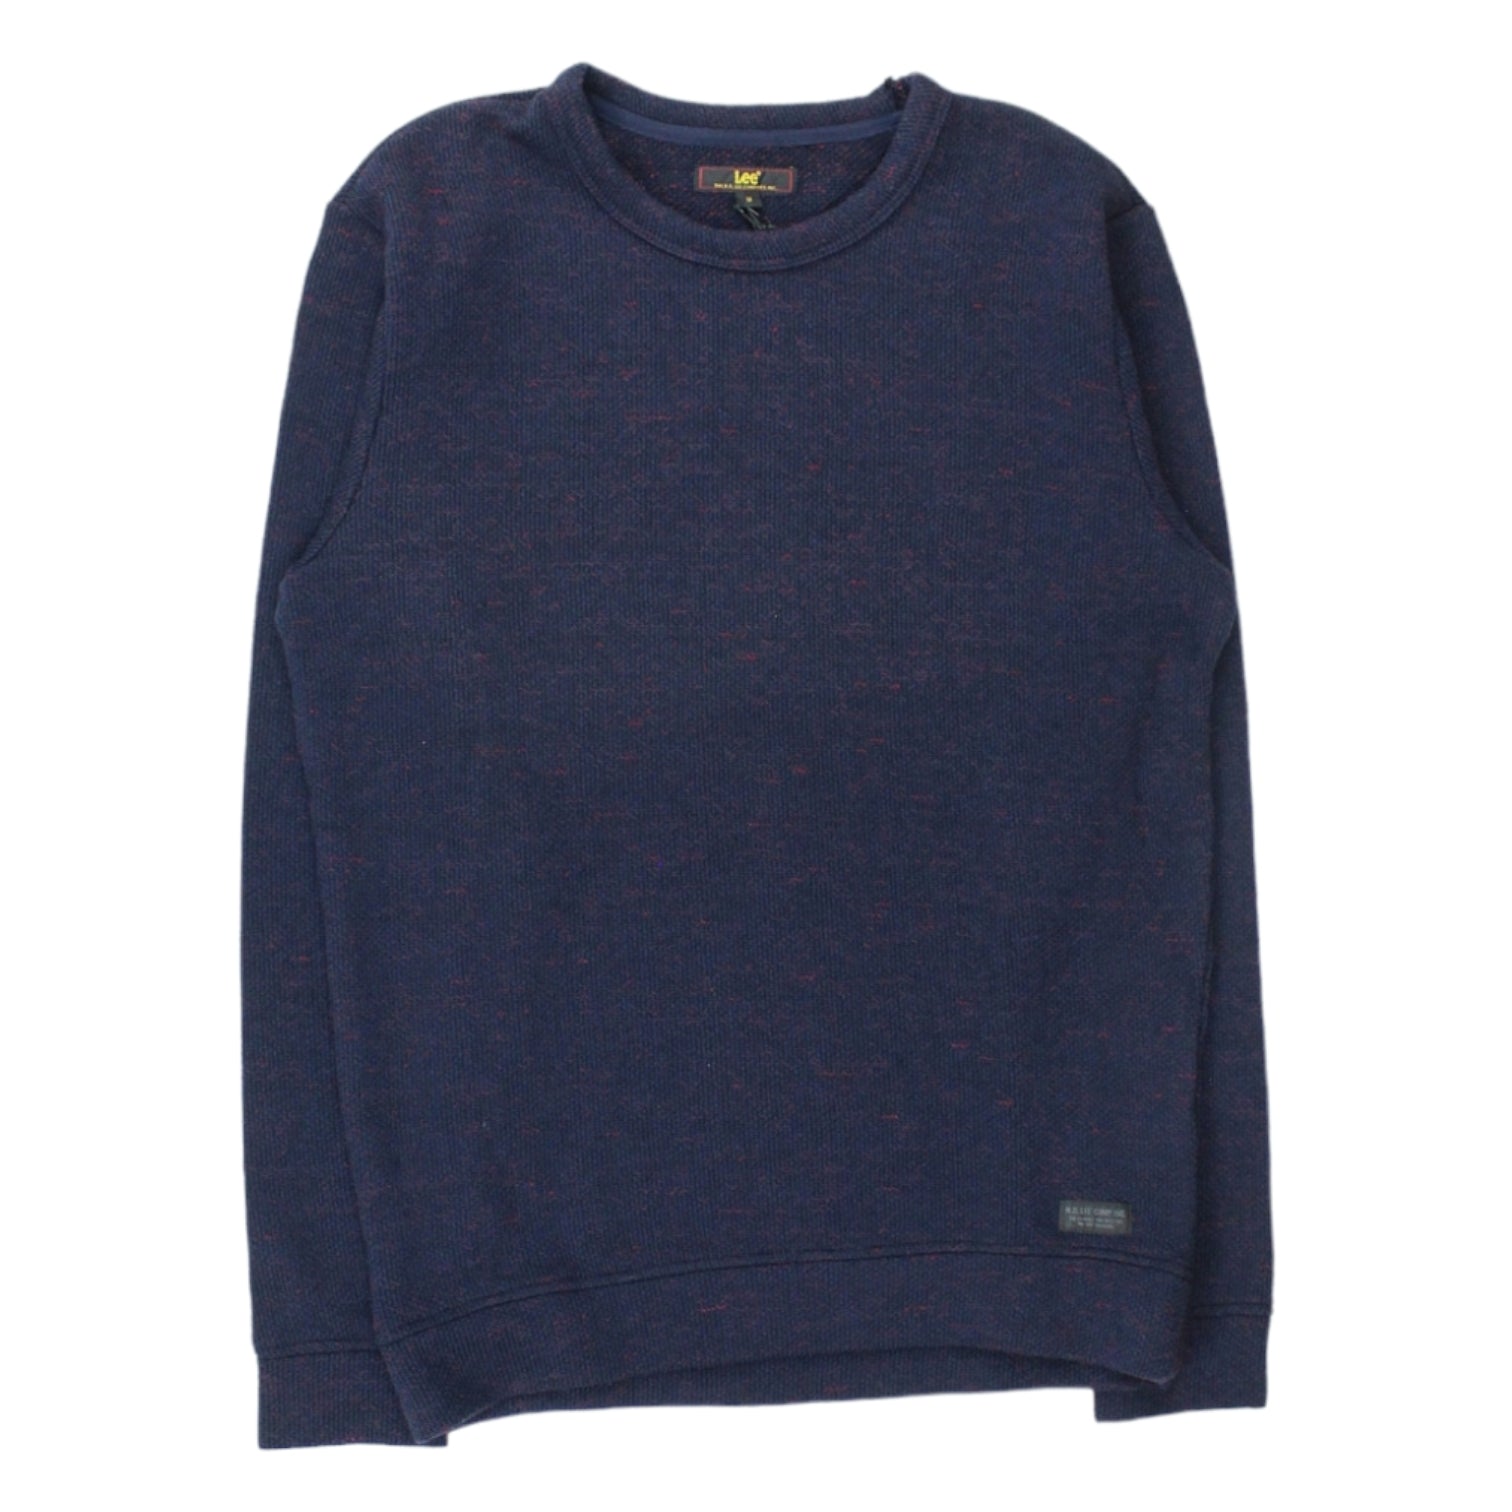 Lee Blue With Red Flecks Knit Sweatshirt